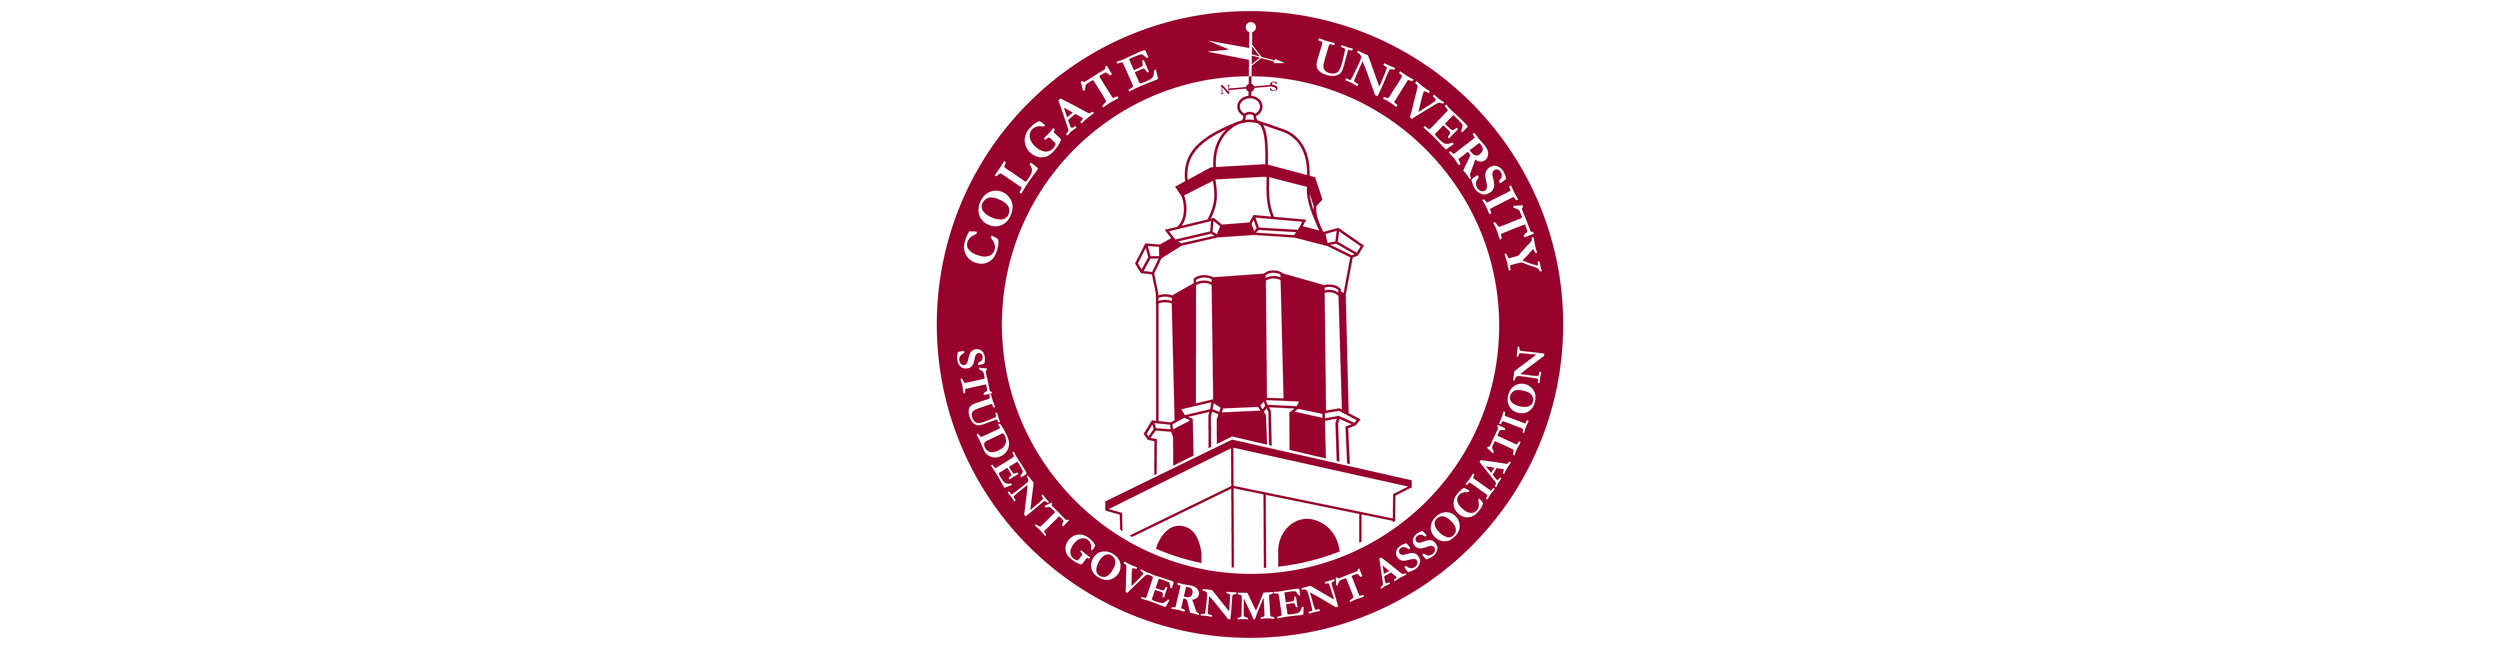 colgate university logo